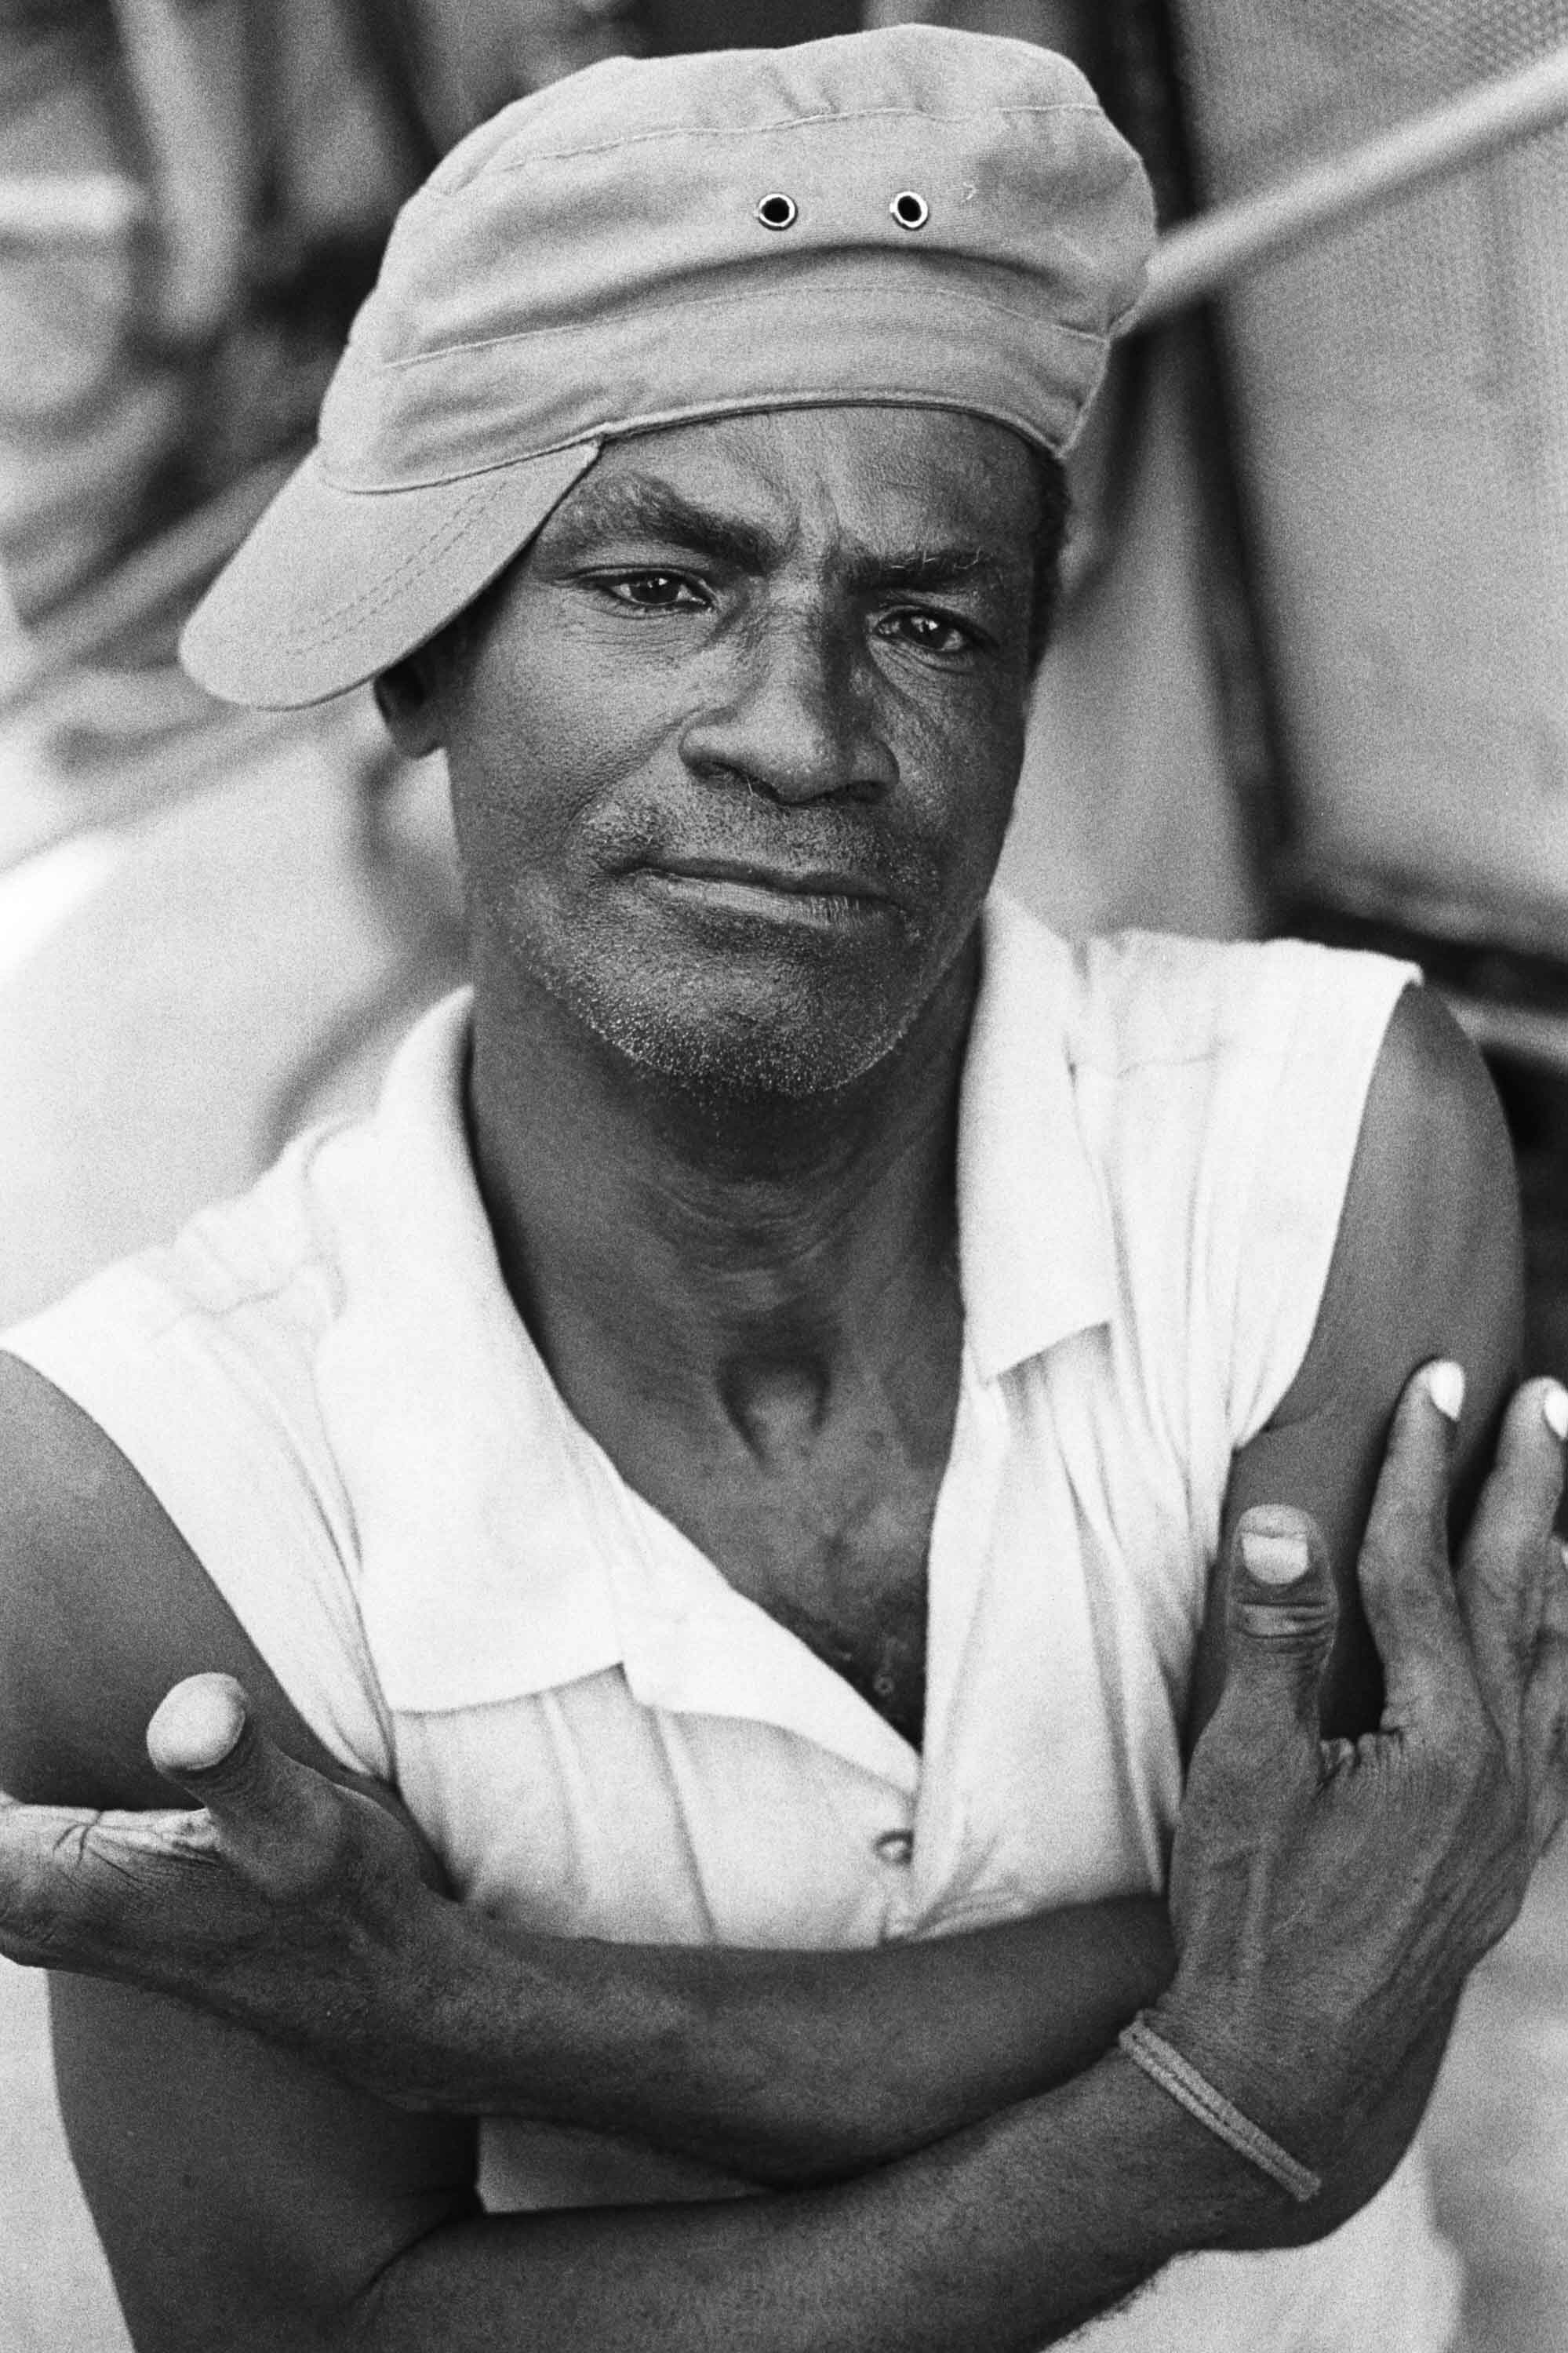 Photo of a man in Cuba